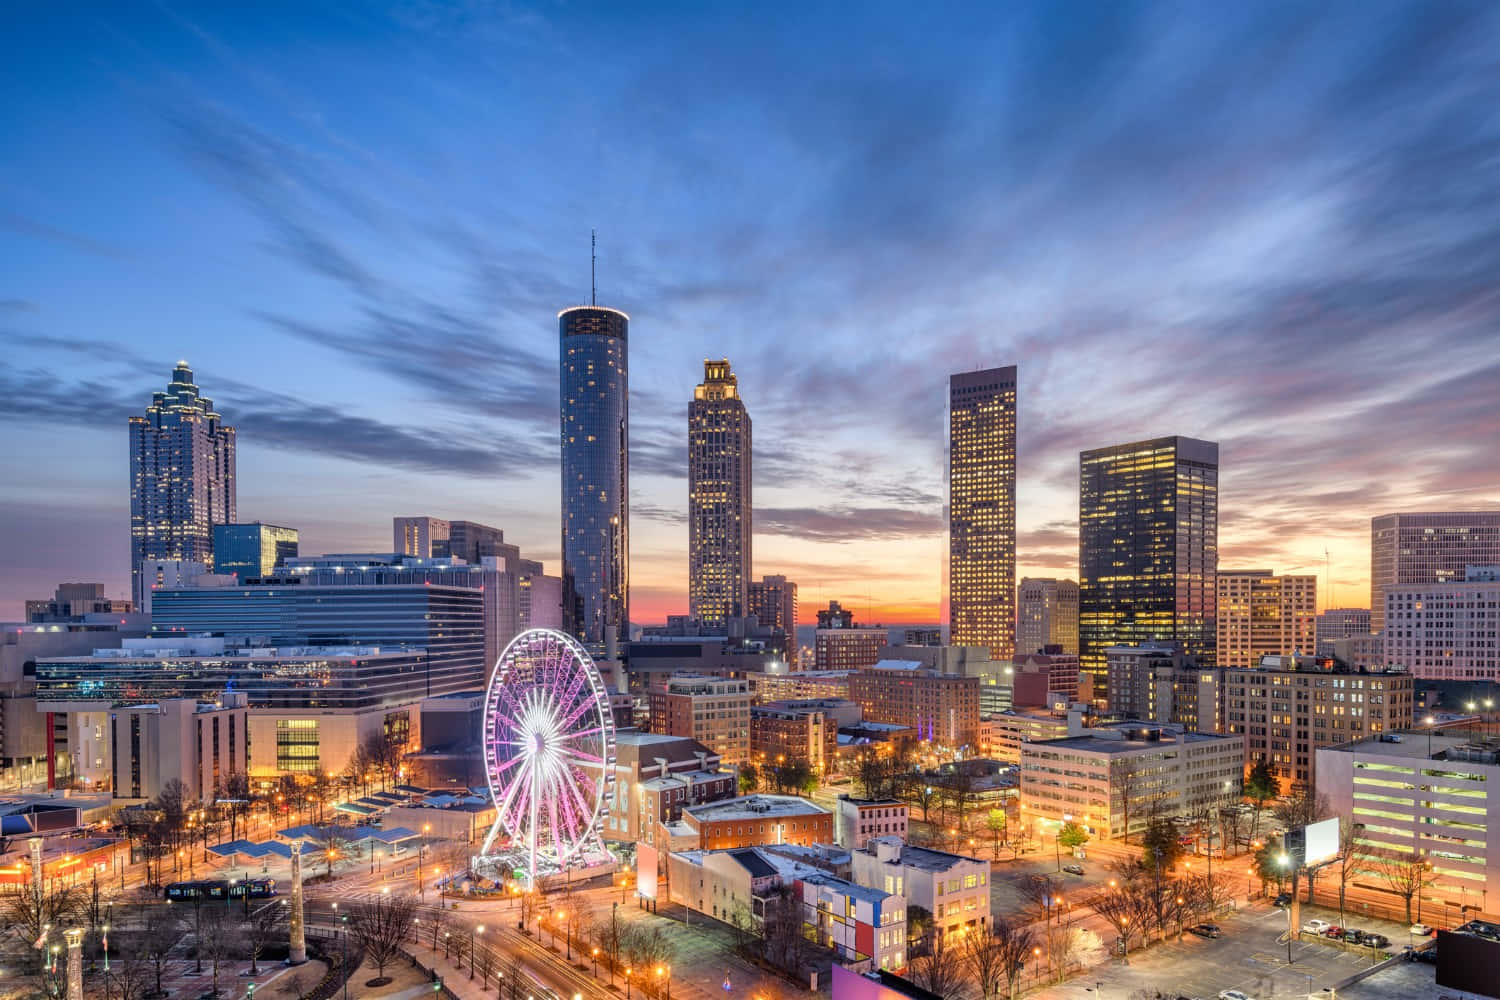 Soaring Skyward - A Photographic Look at the Beauty of Atlanta, Georgia